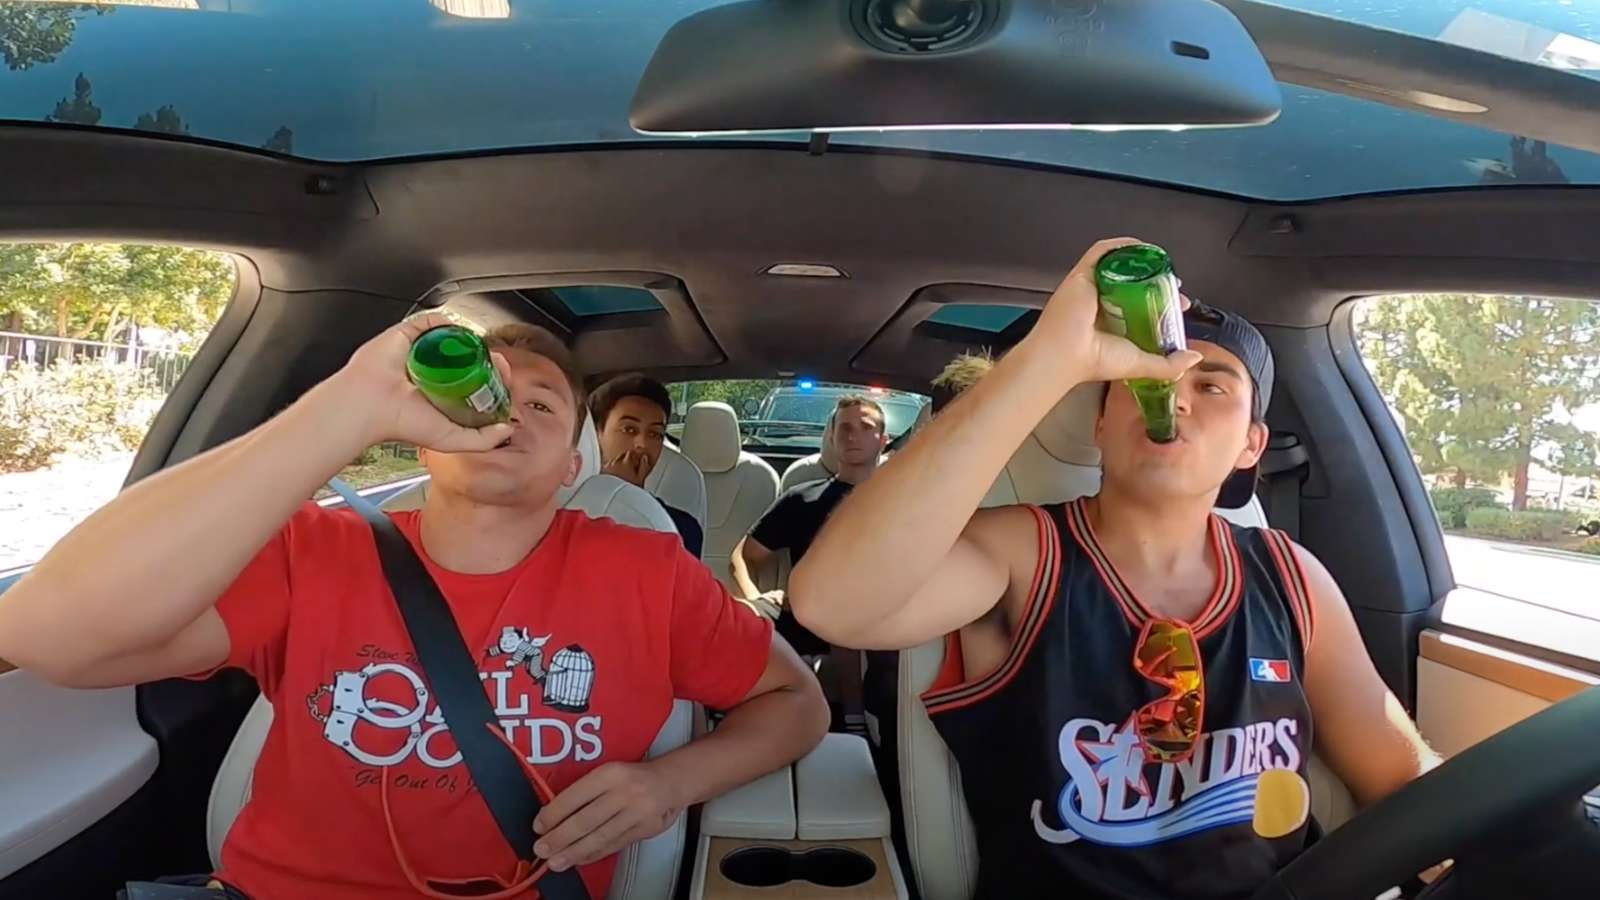 NELK Boys prank police with fake beer on YouTube